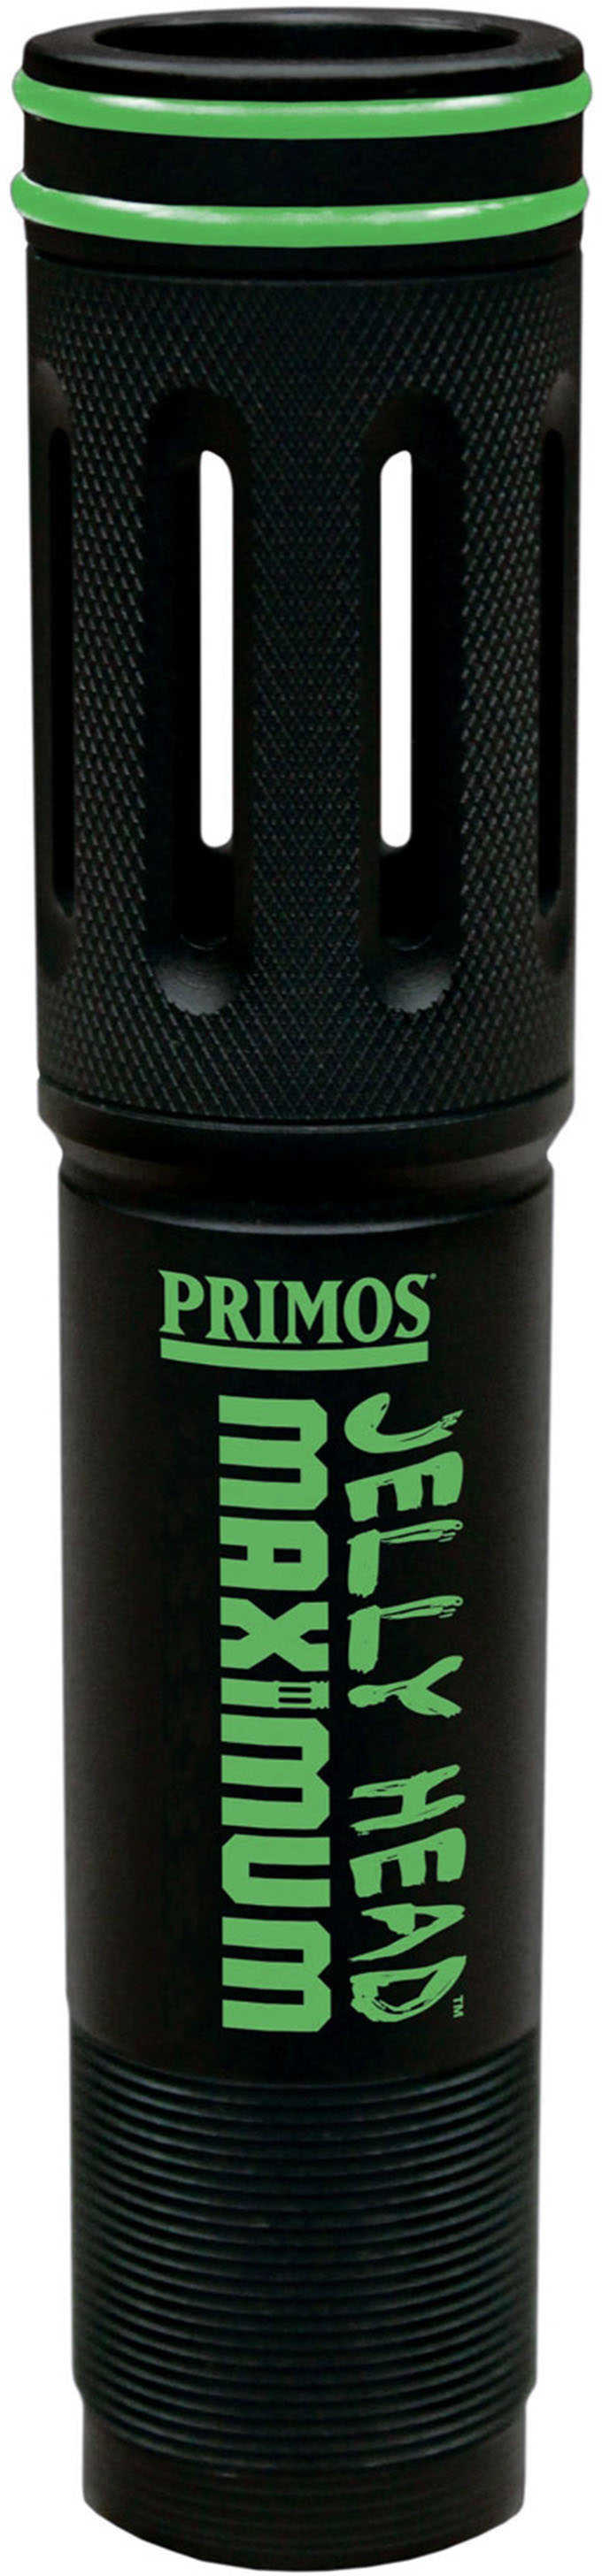 Primos Jelly Head Maximum Choke Tube Fits Benelli M2 20 Gauge XX-Full .570 Constriction Black 69411